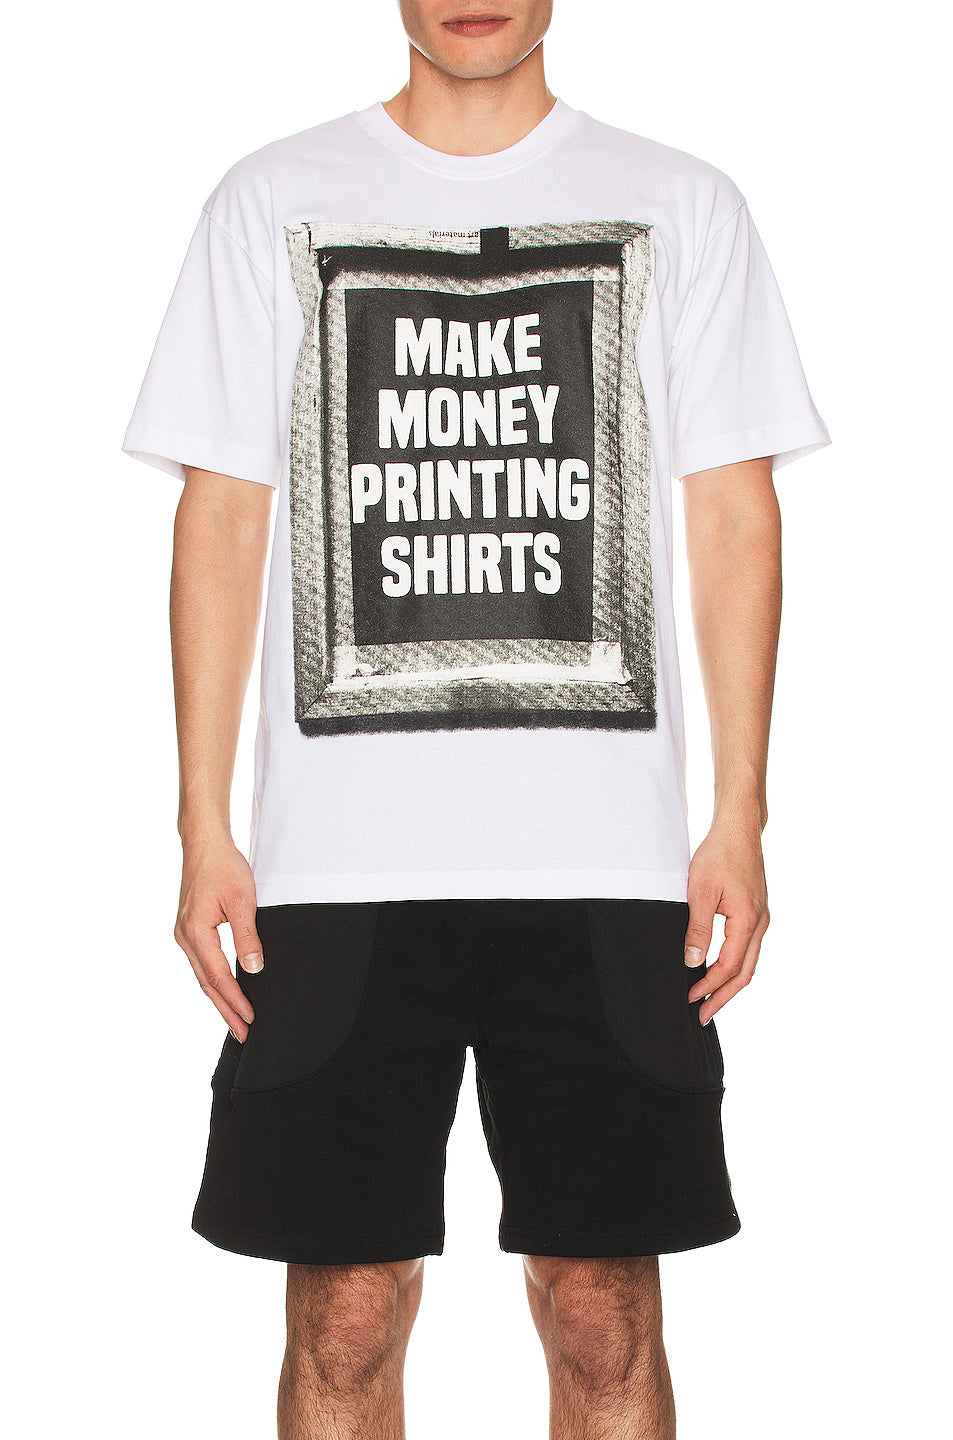 Printing Money T-shirt